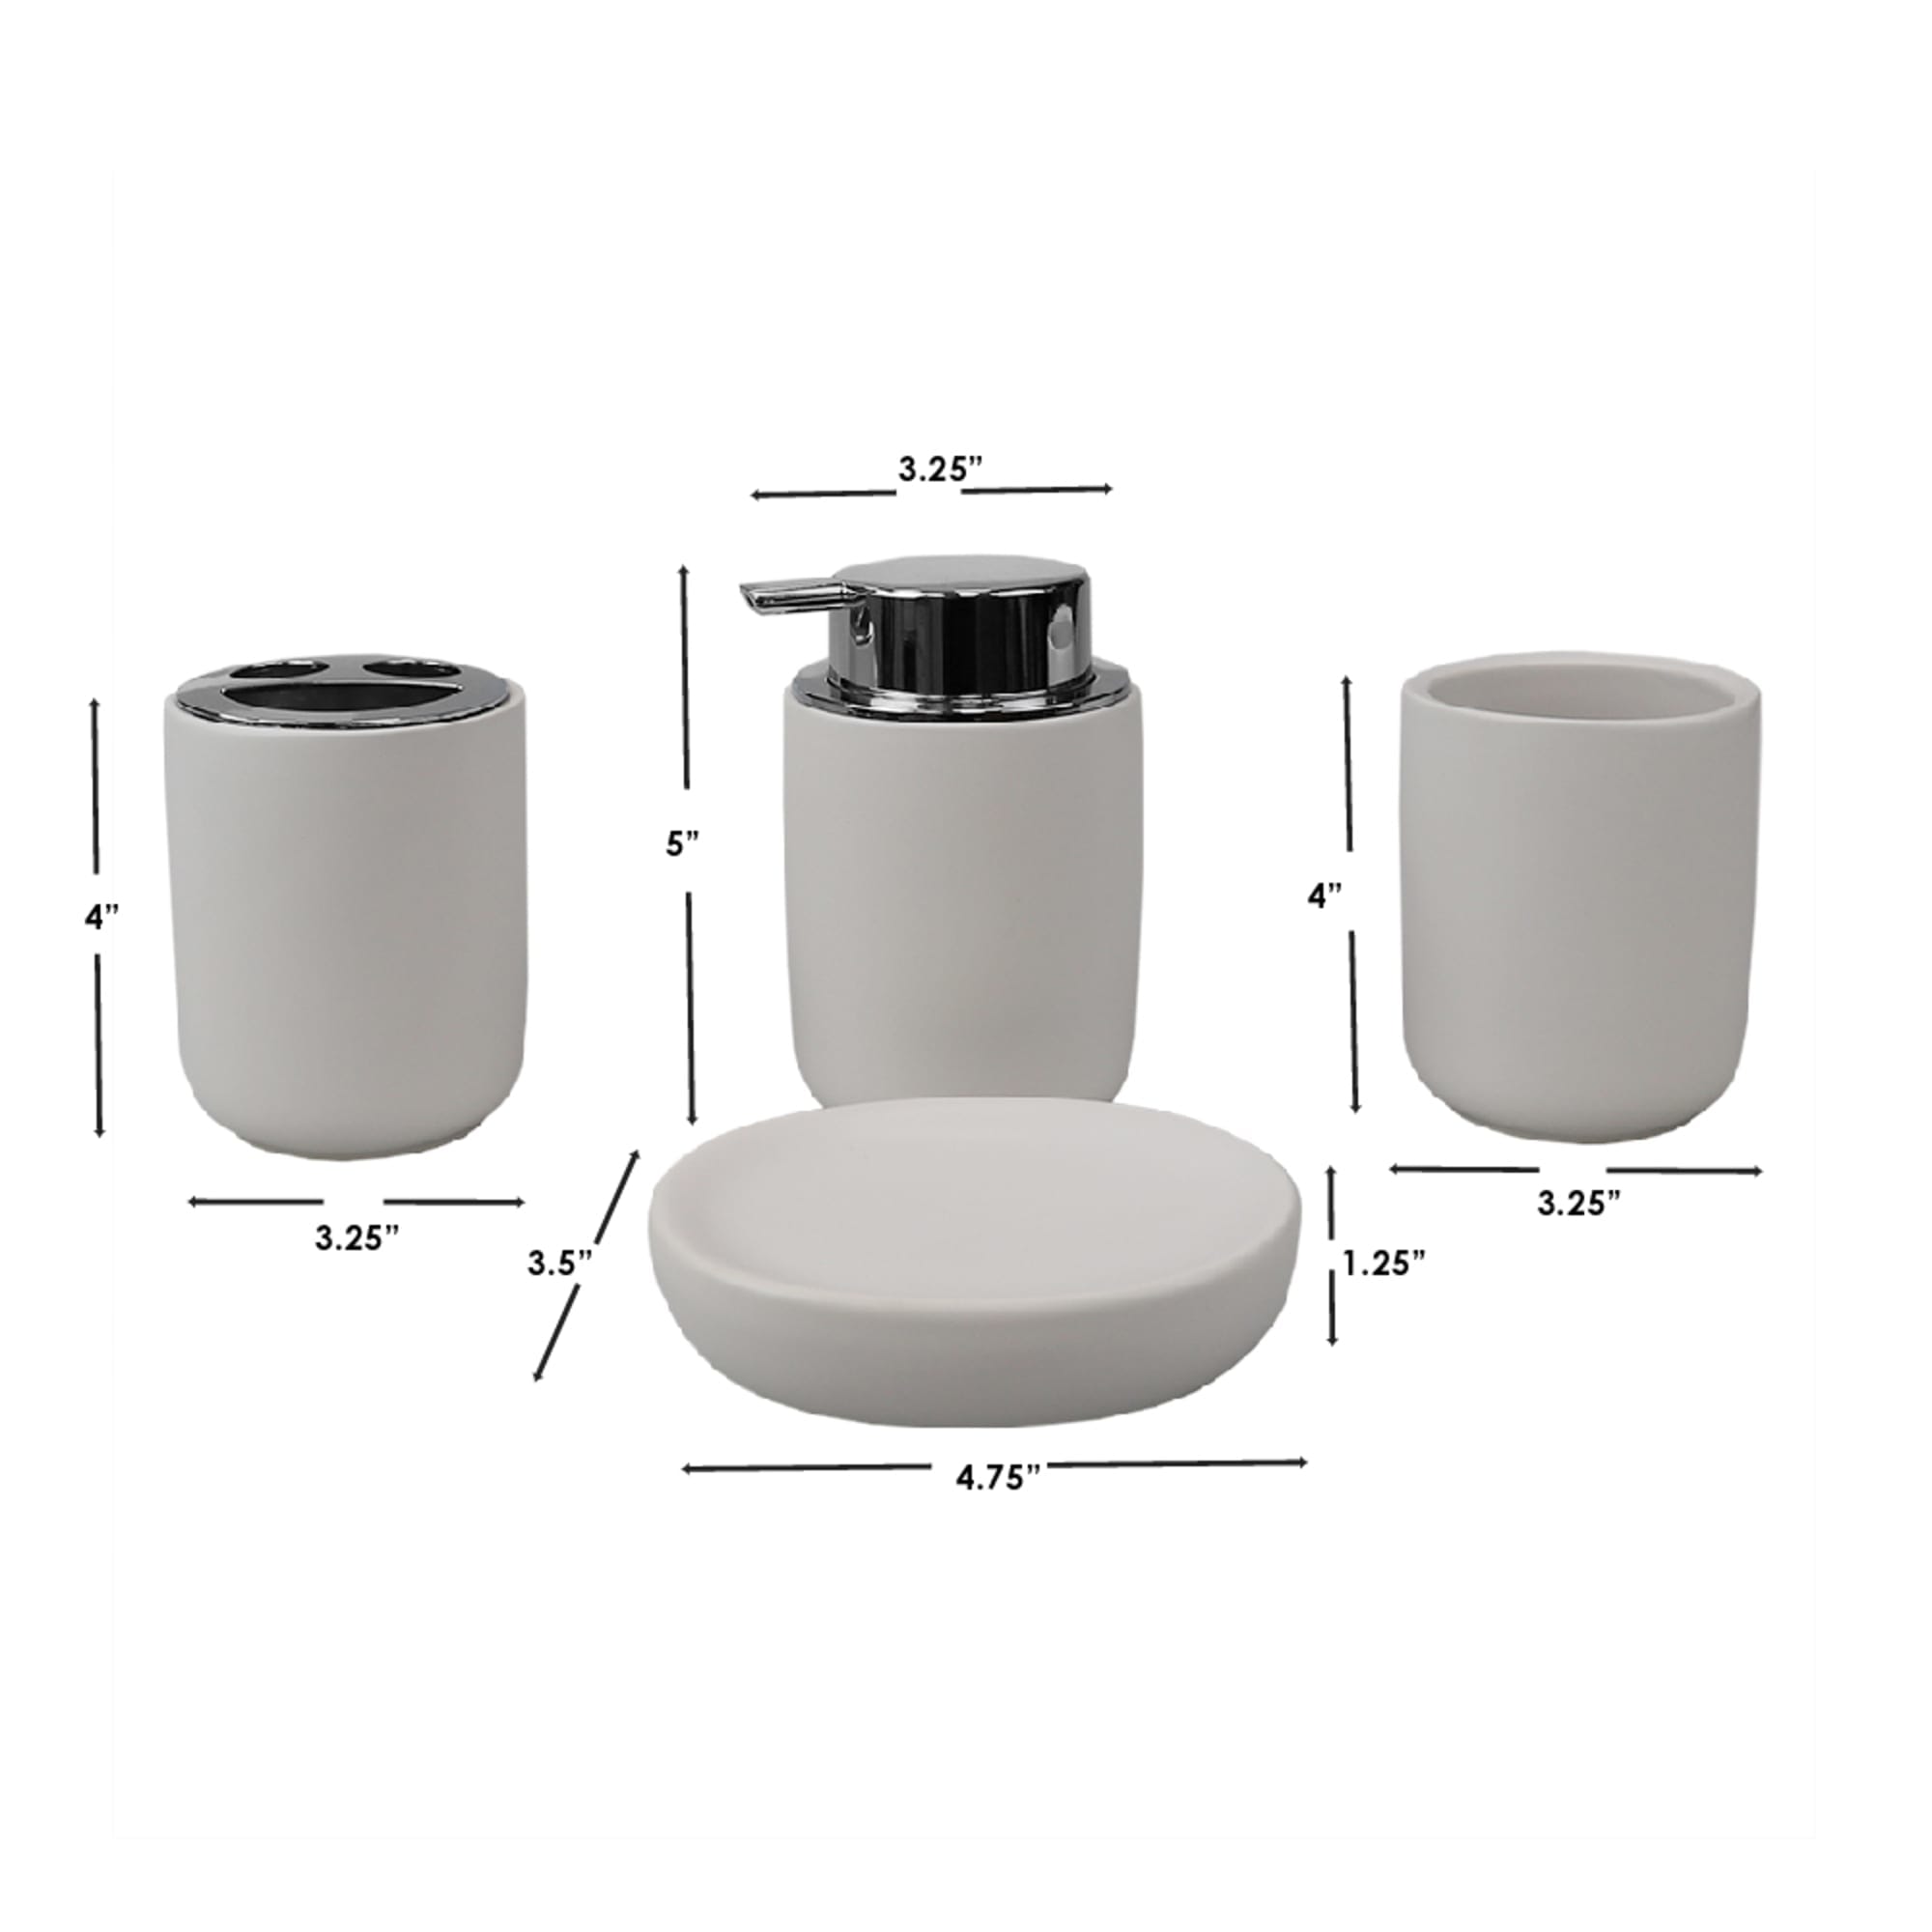 Home Basics Luxem 4 Piece Ceramic Bath Accessory Set, White $10.00 EACH, CASE PACK OF 12